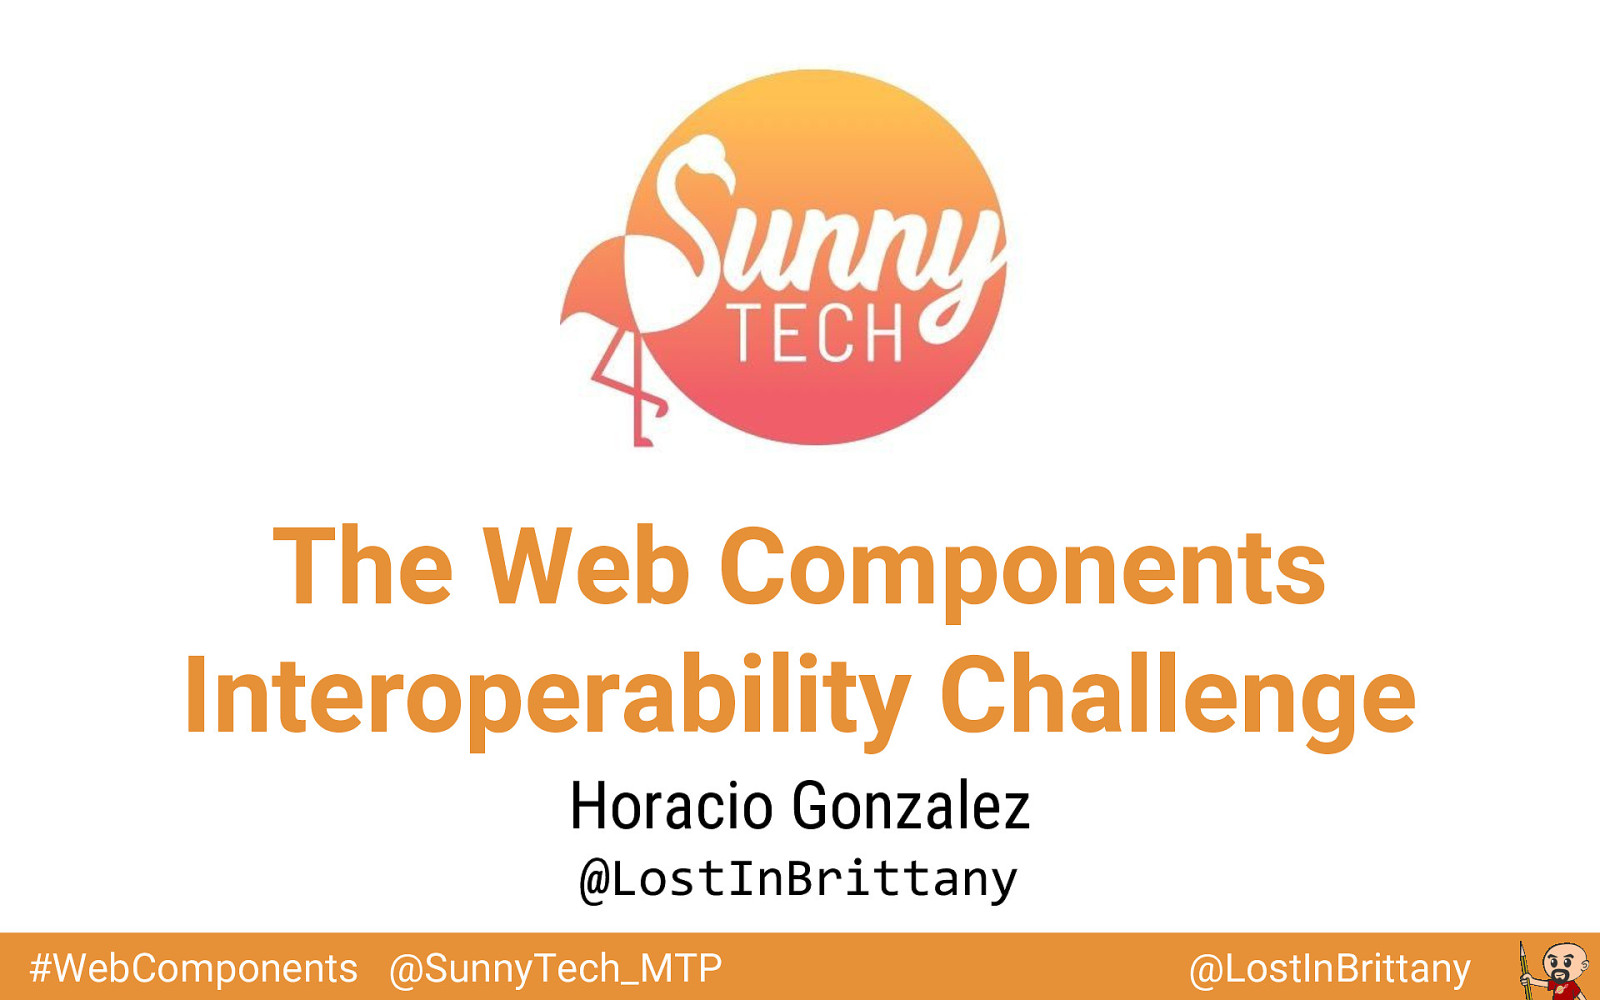 The Web Components interoperability challenge